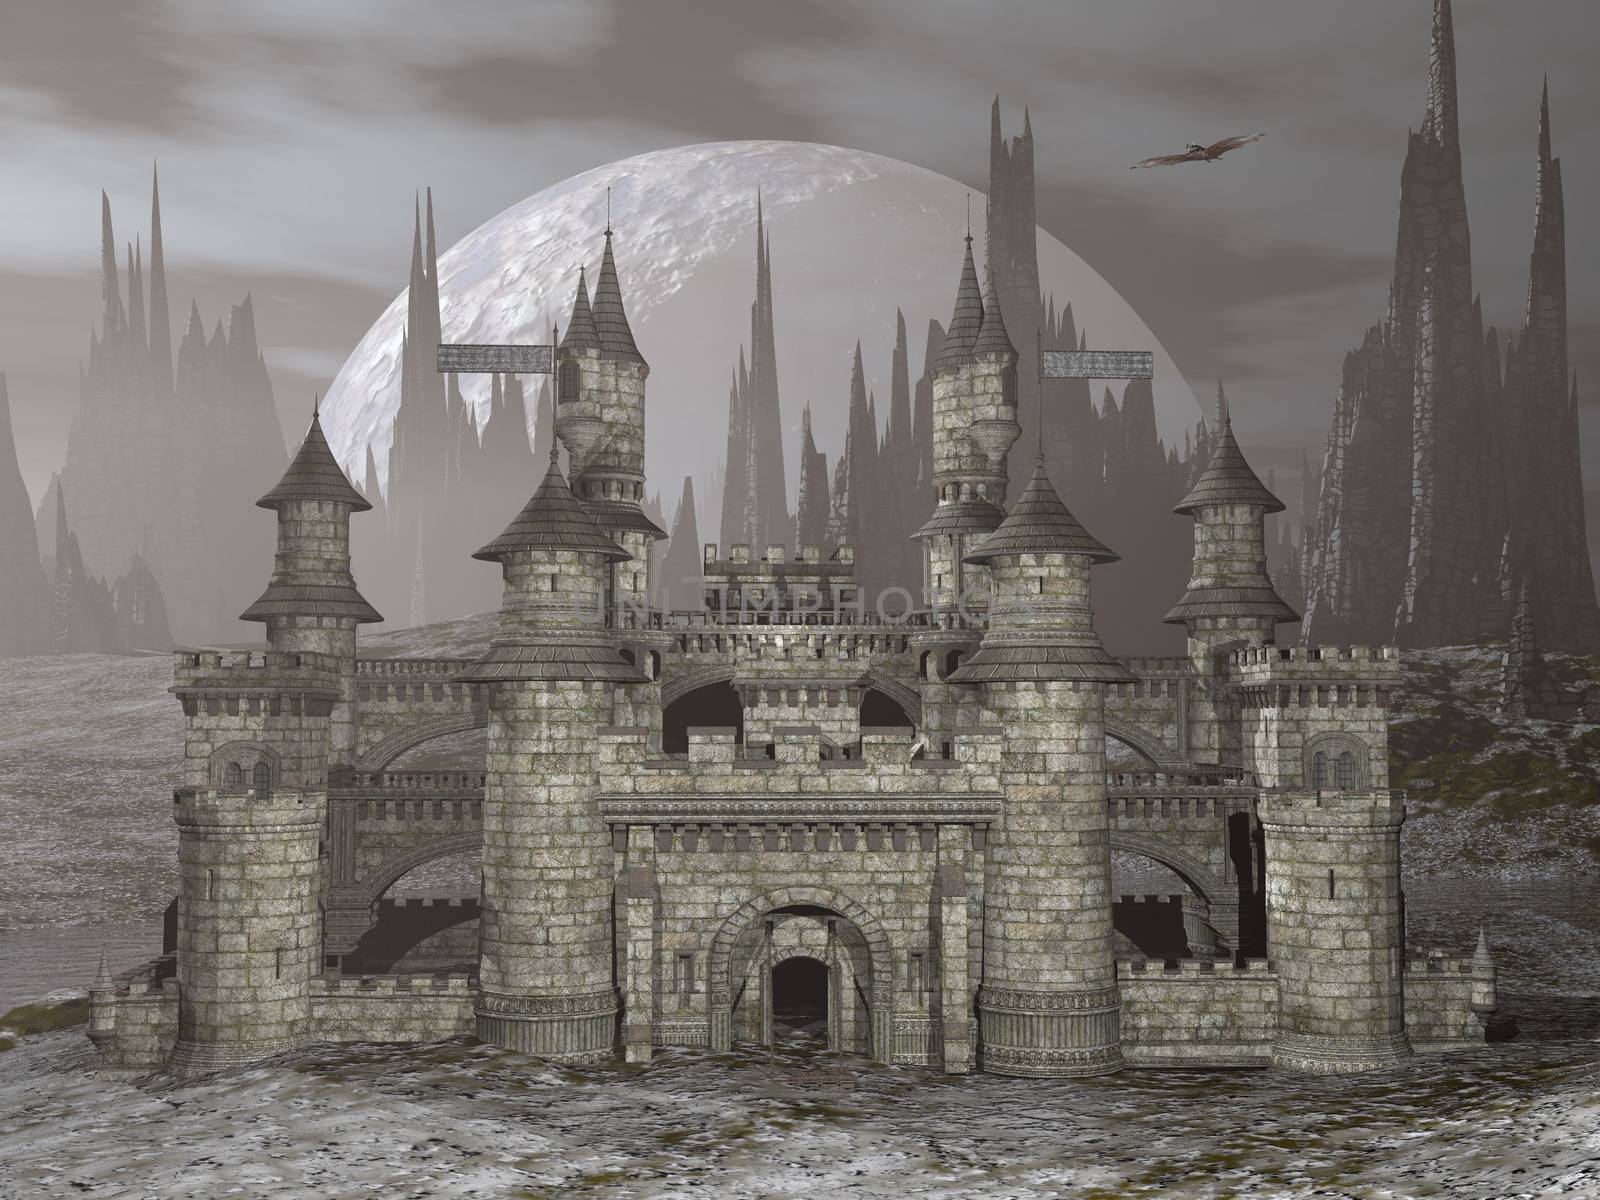 Castle by night - 3D render by Elenaphotos21